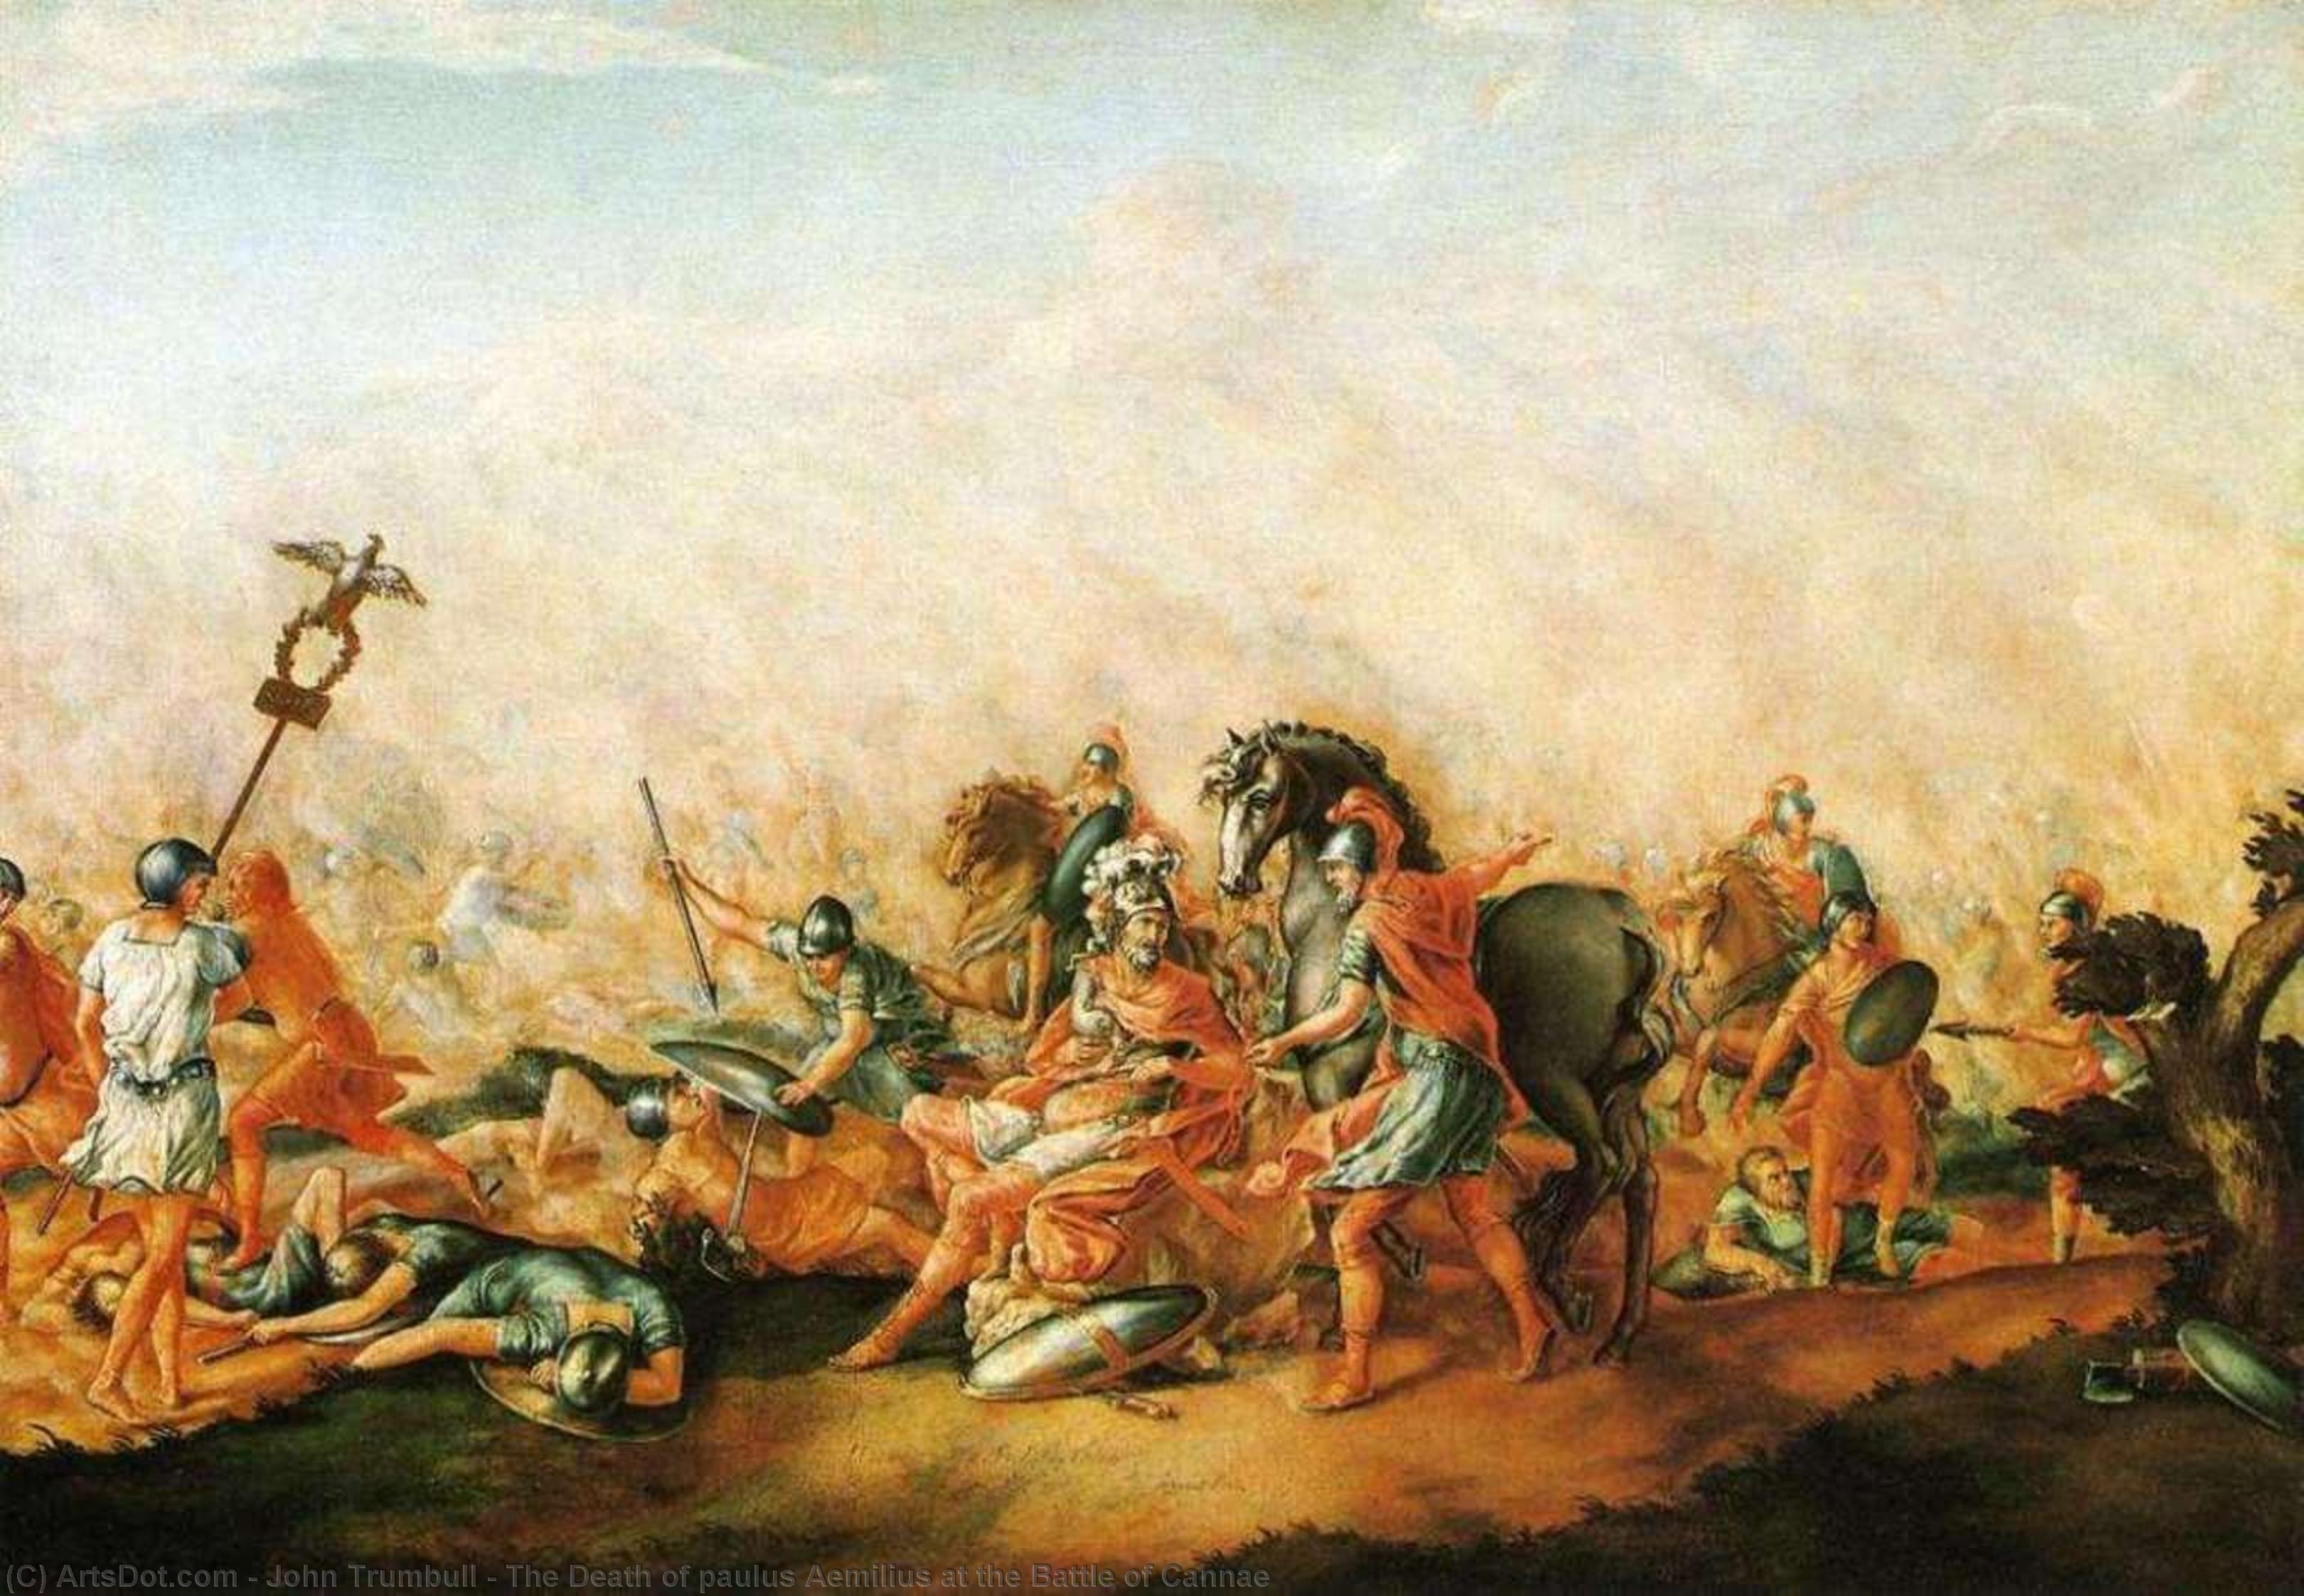 Order Paintings Reproductions The Death of paulus Aemilius at the Battle of Cannae, 1773 by John Trumbull (1756-1843, United Kingdom) | ArtsDot.com